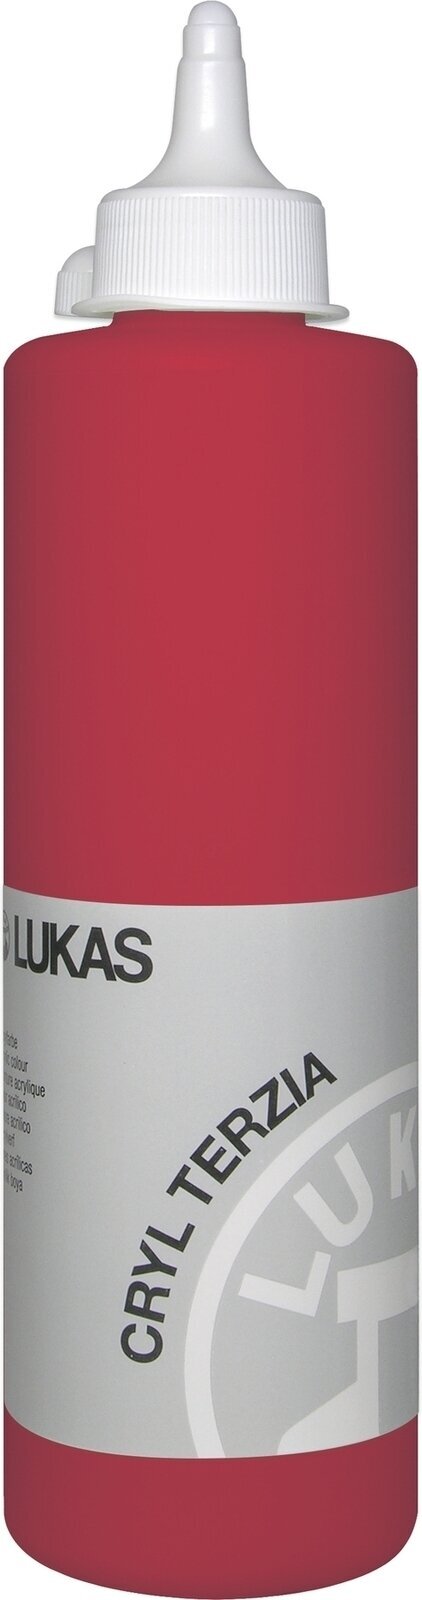 Acrylic Paint Lukas Cryl Terzia Acrylic Paint Plastic Bottle Acrylic Paint Cadmium Red Deep Hue 500 ml 1 pc